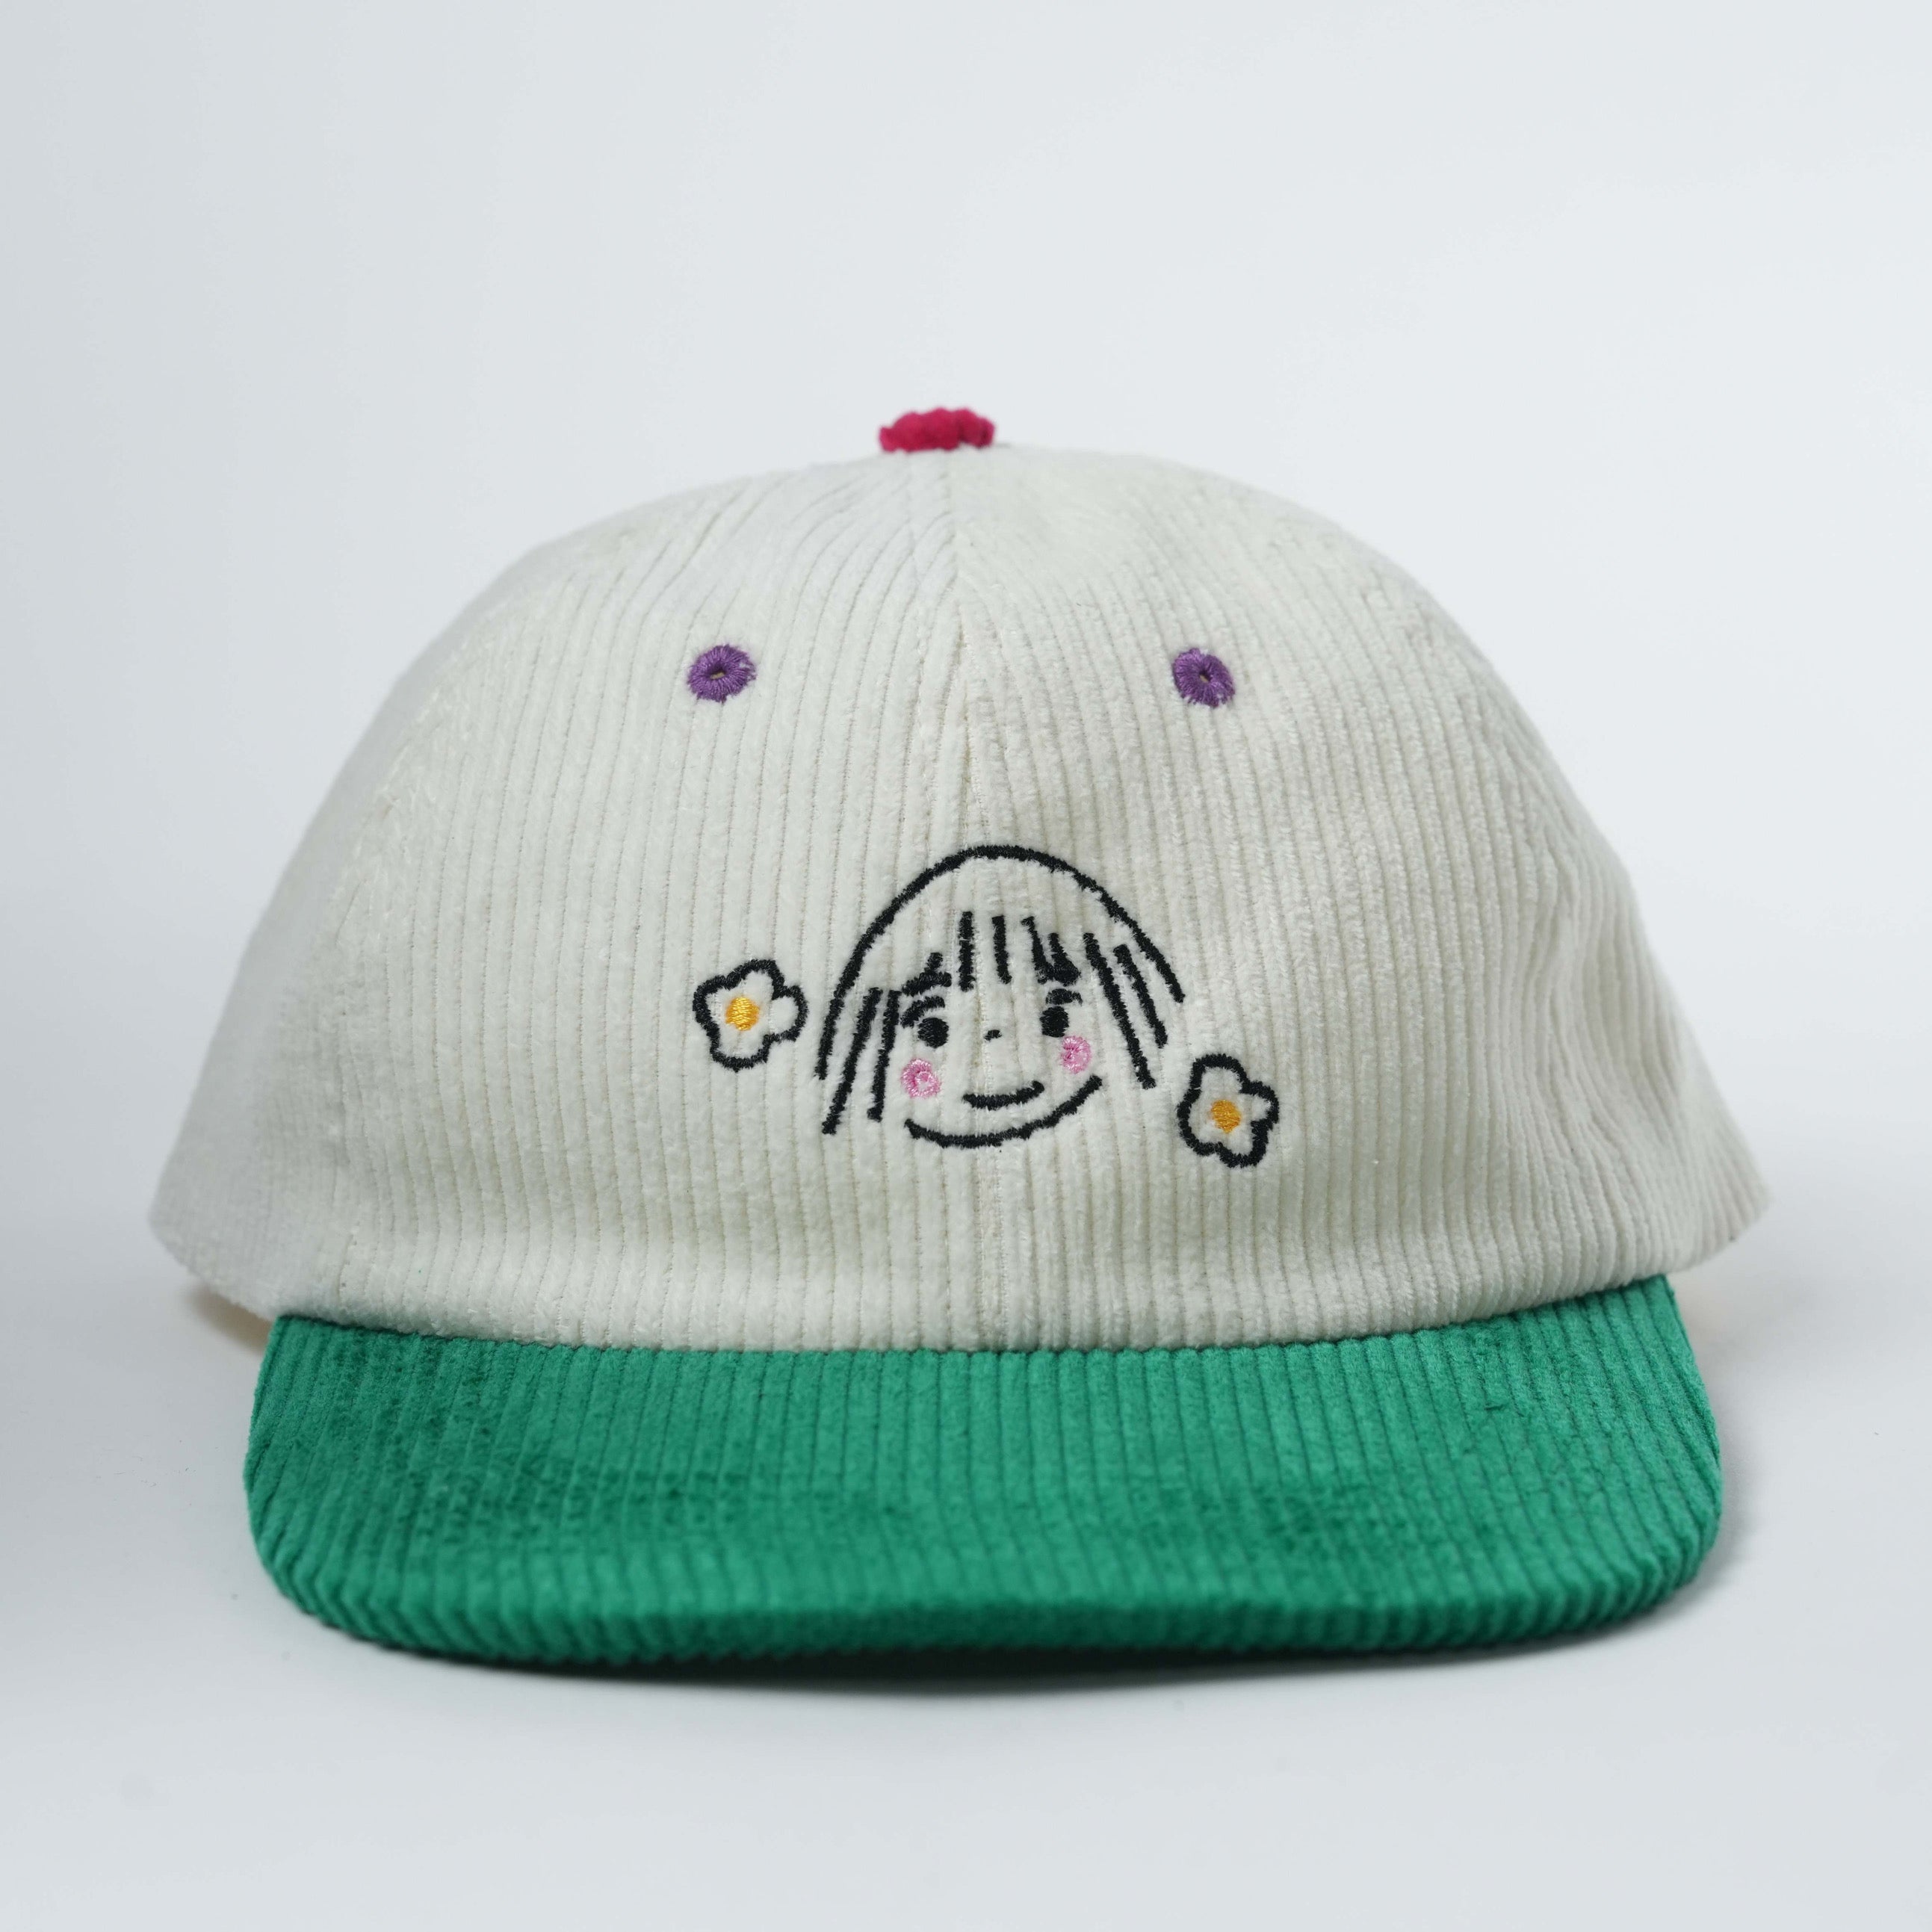 Chihiro's Letter Hat